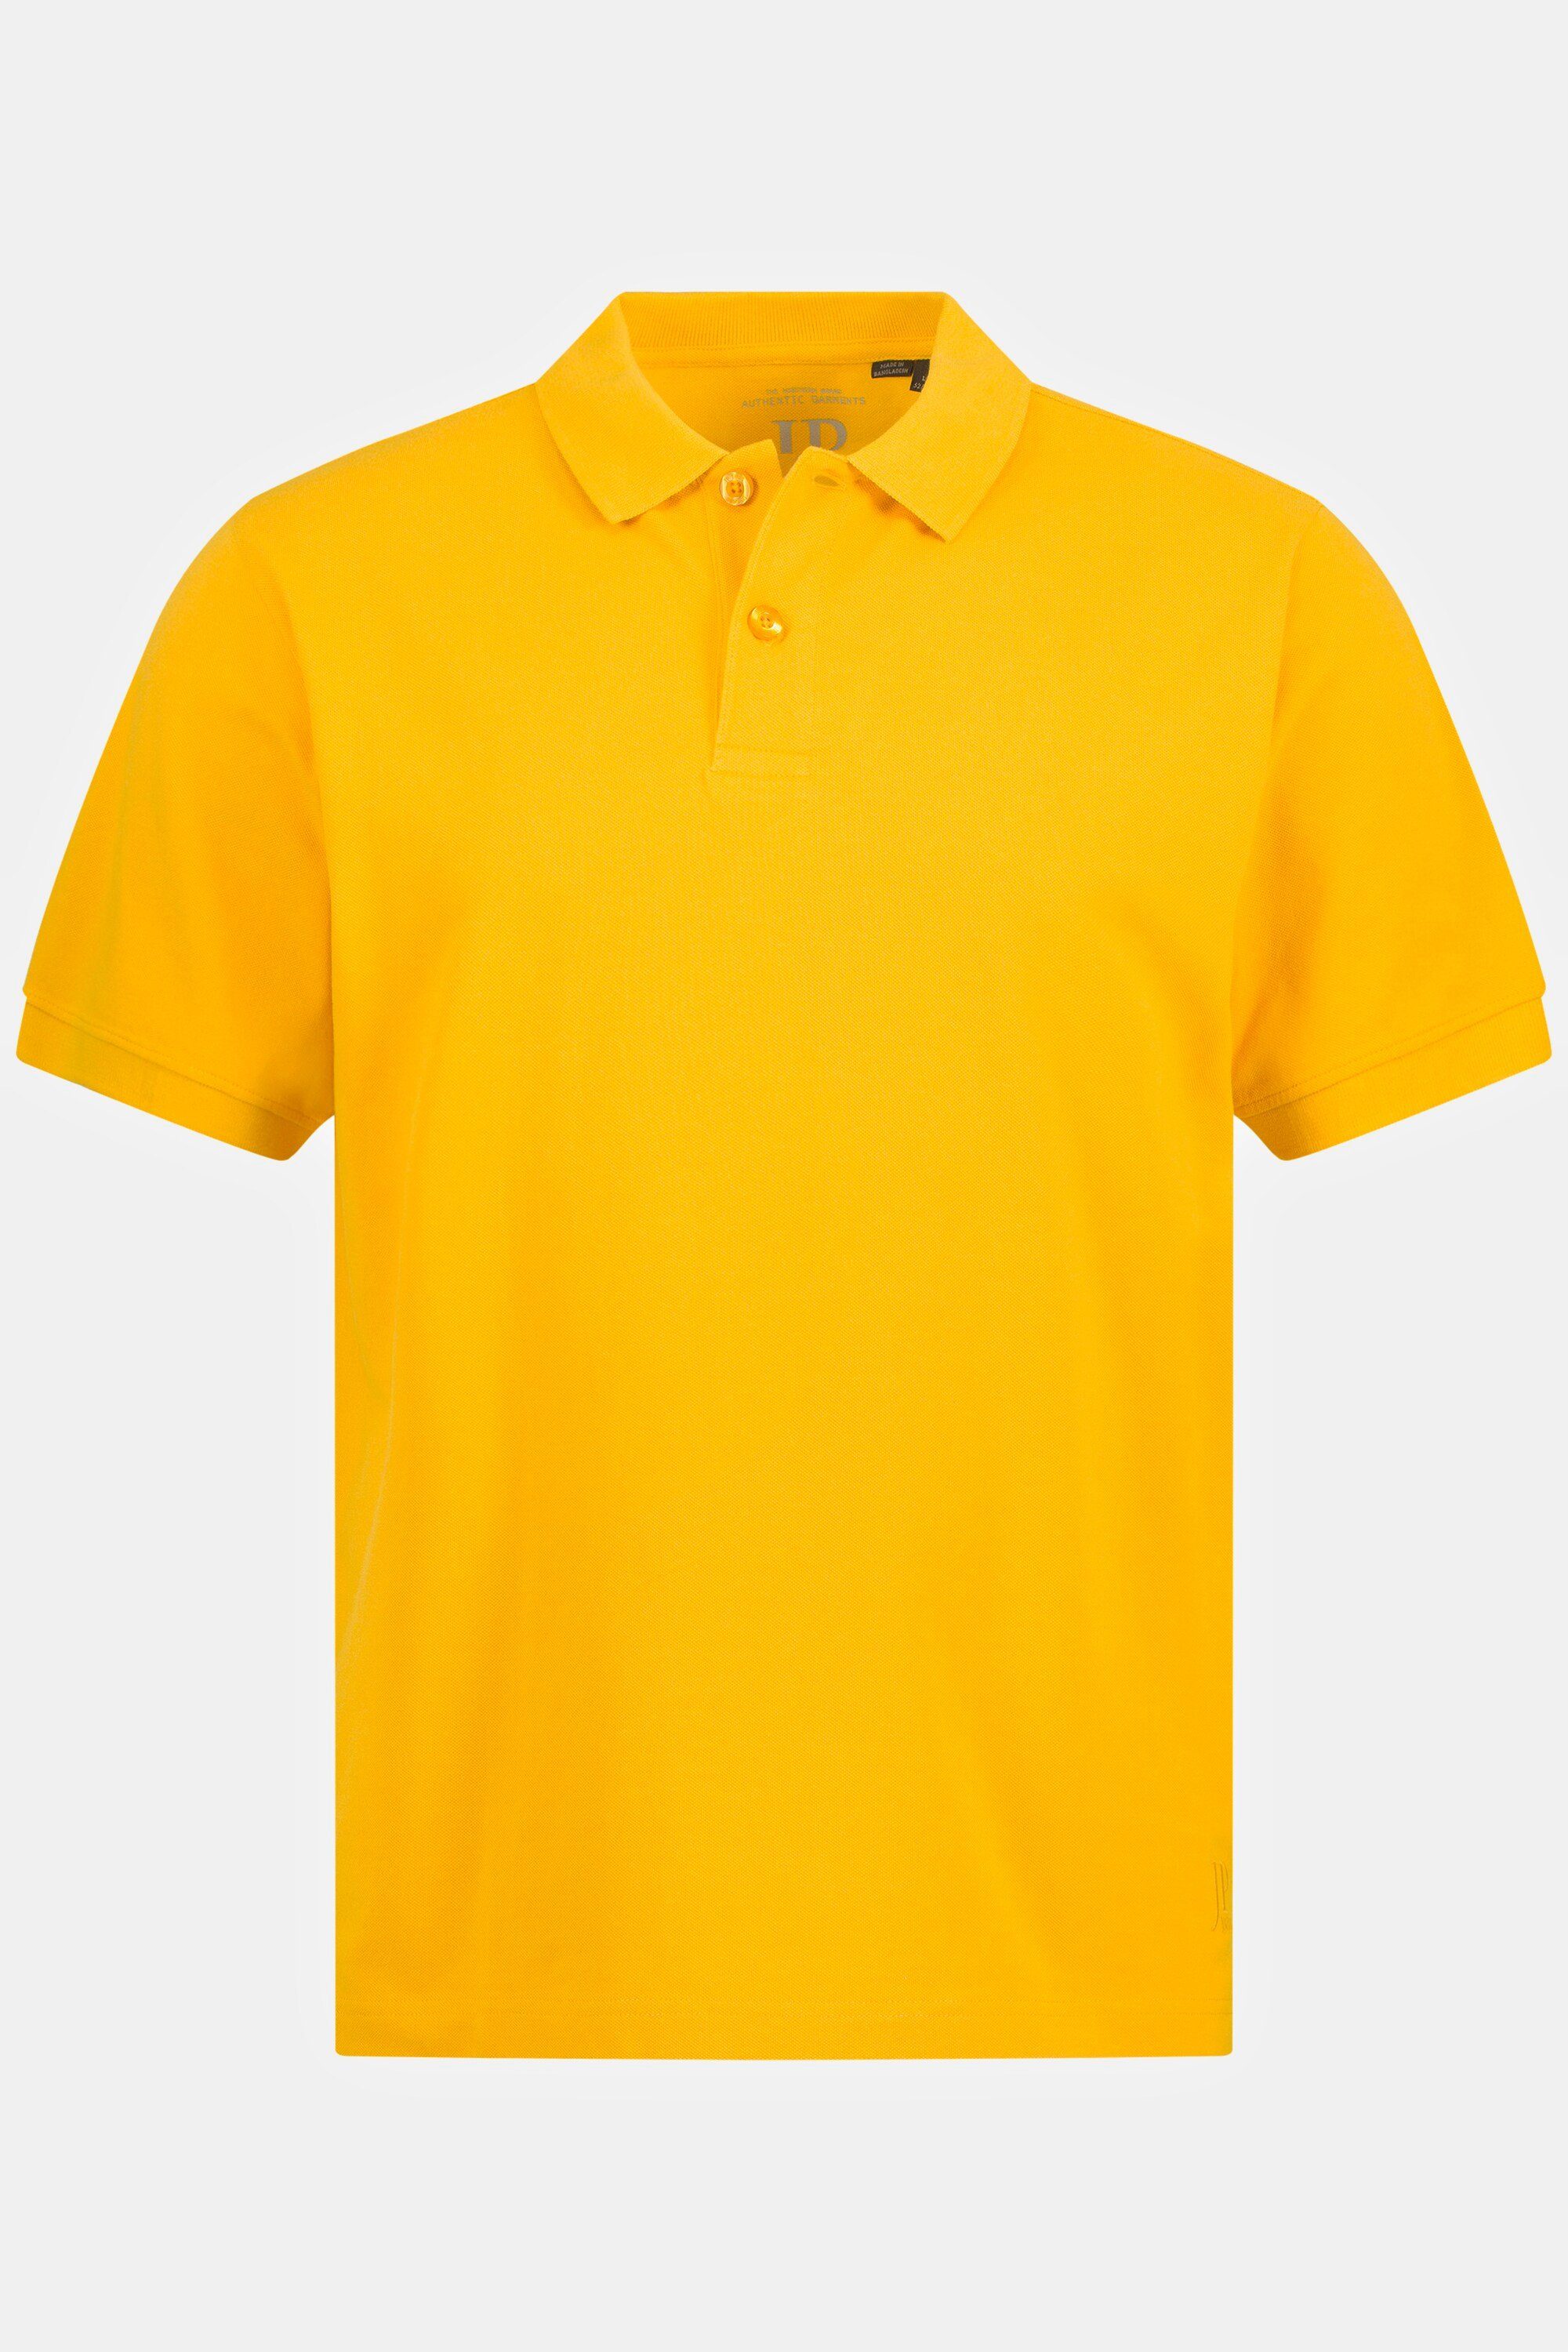 Halbarm gelb Basic bis Poloshirt Piqué Poloshirt JP1880 10XL